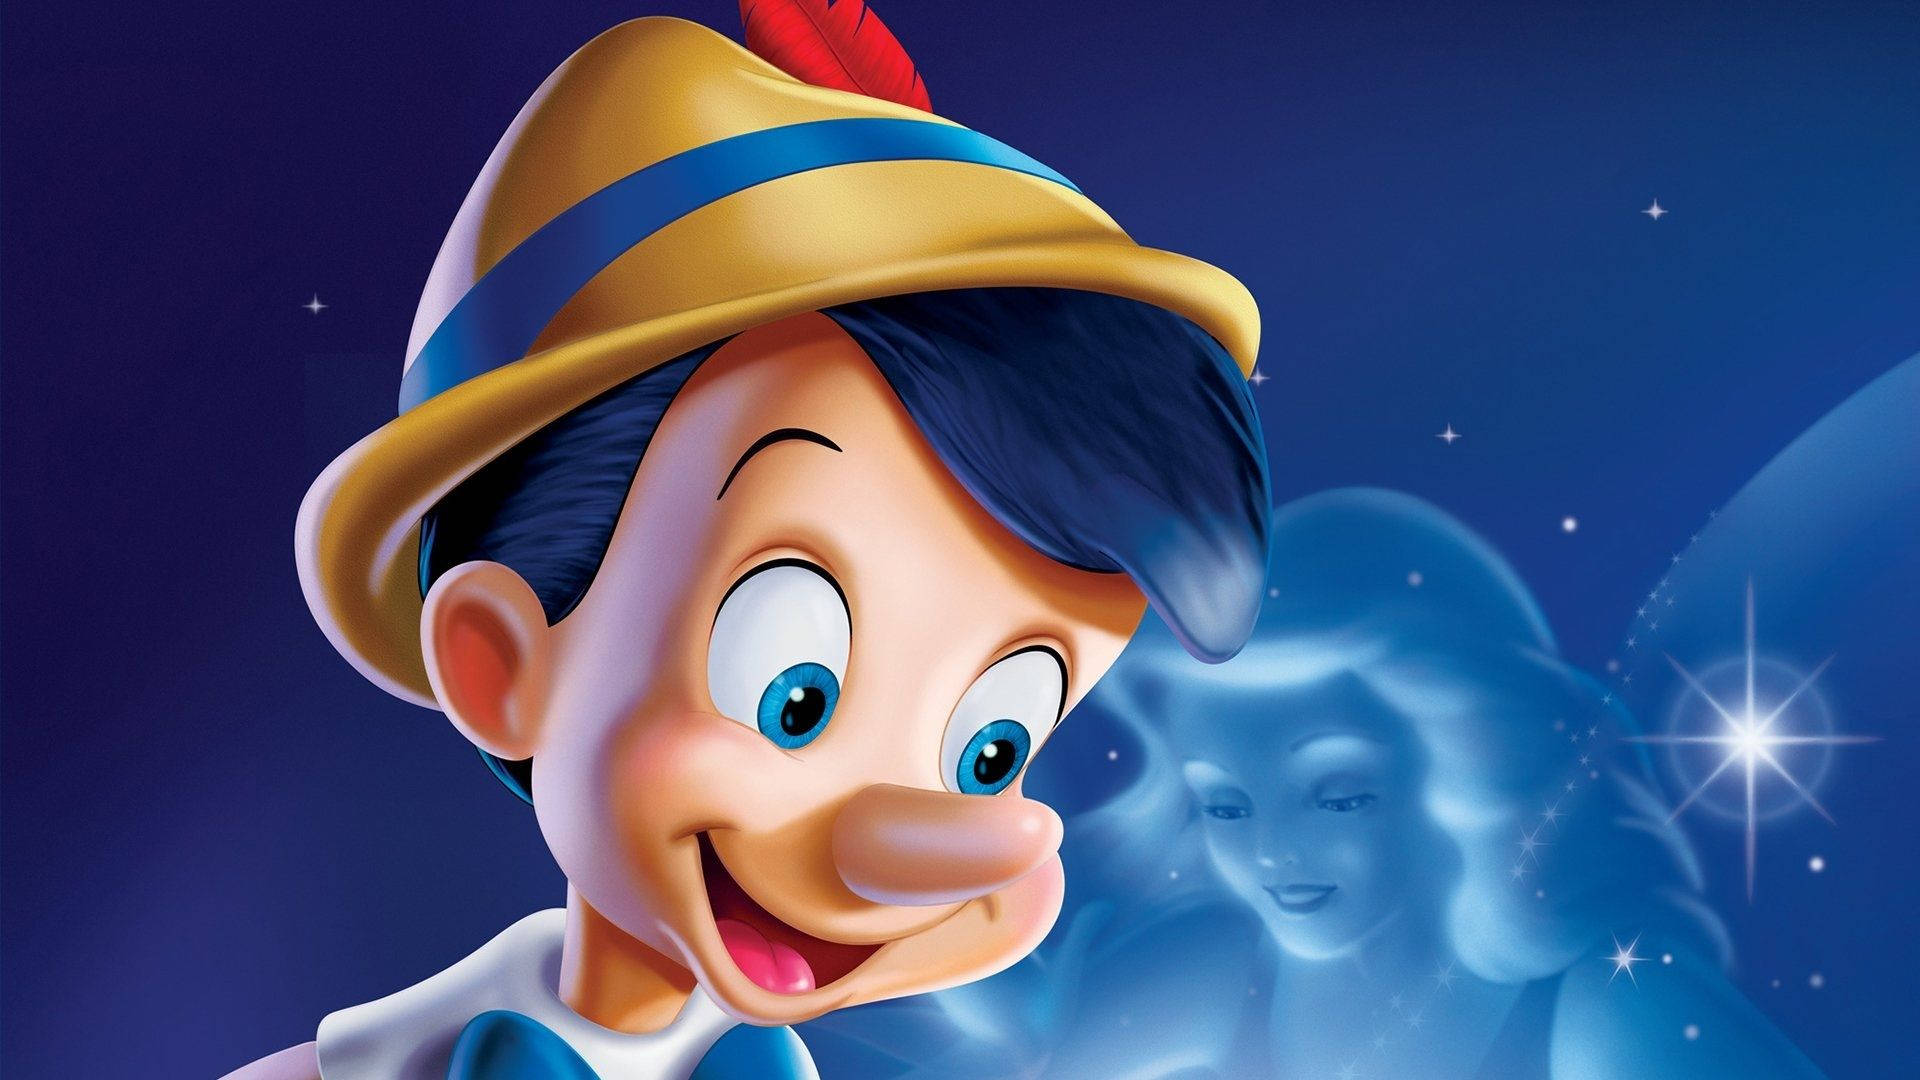 Joyful Pinocchio With A Big Smile Background